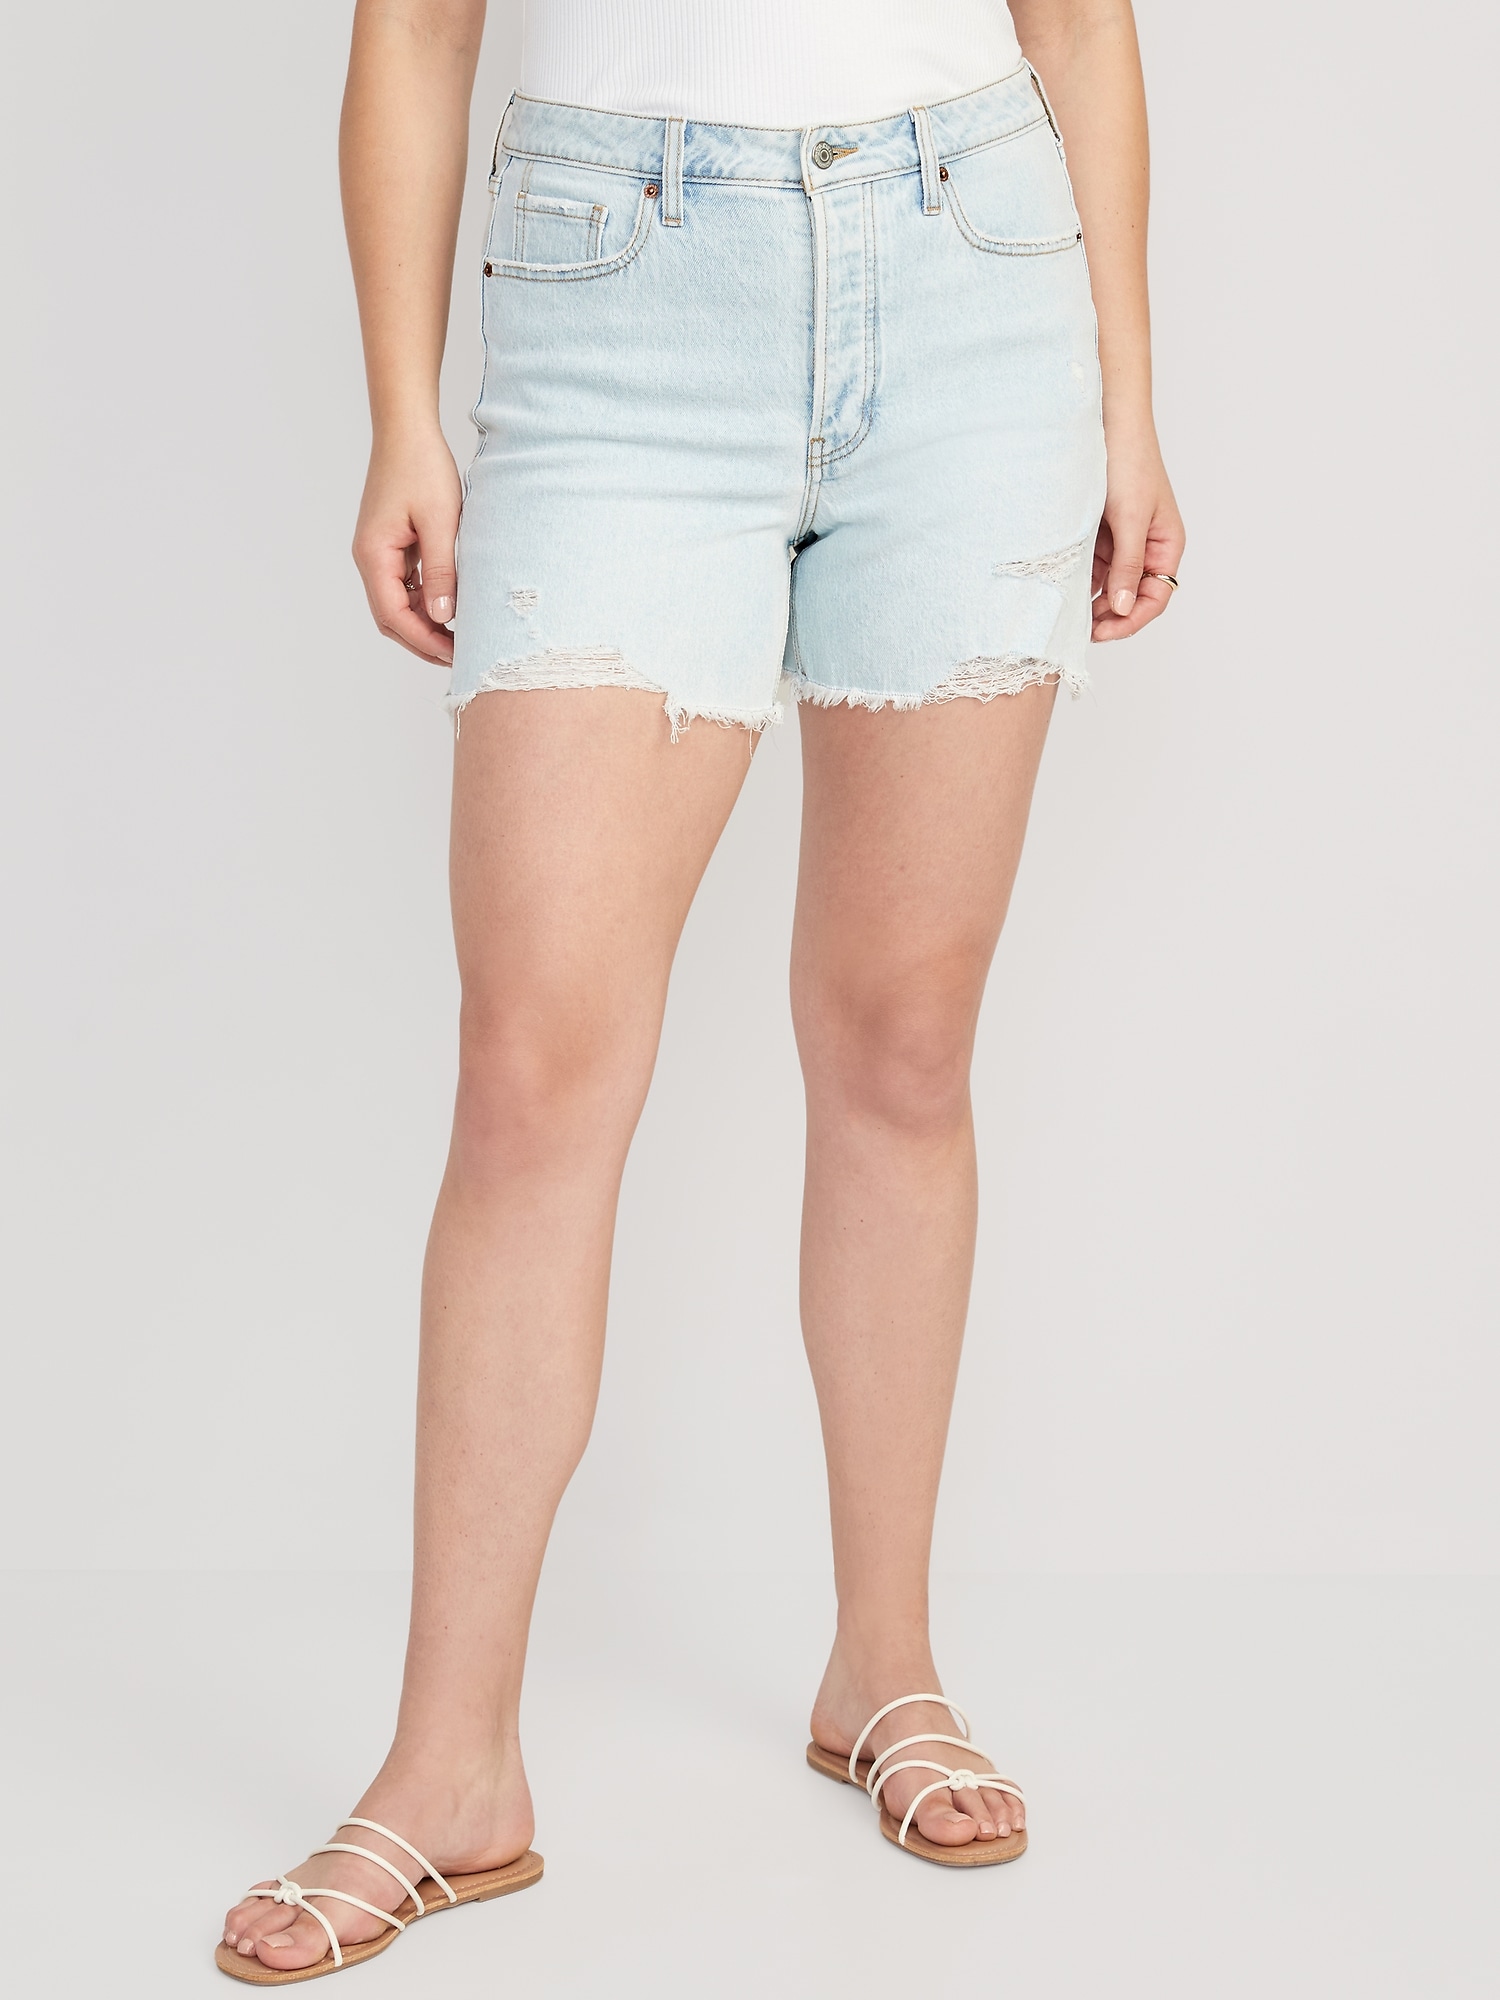 High-Waisted O.G. Straight Jean Shorts -- 5-inch inseam